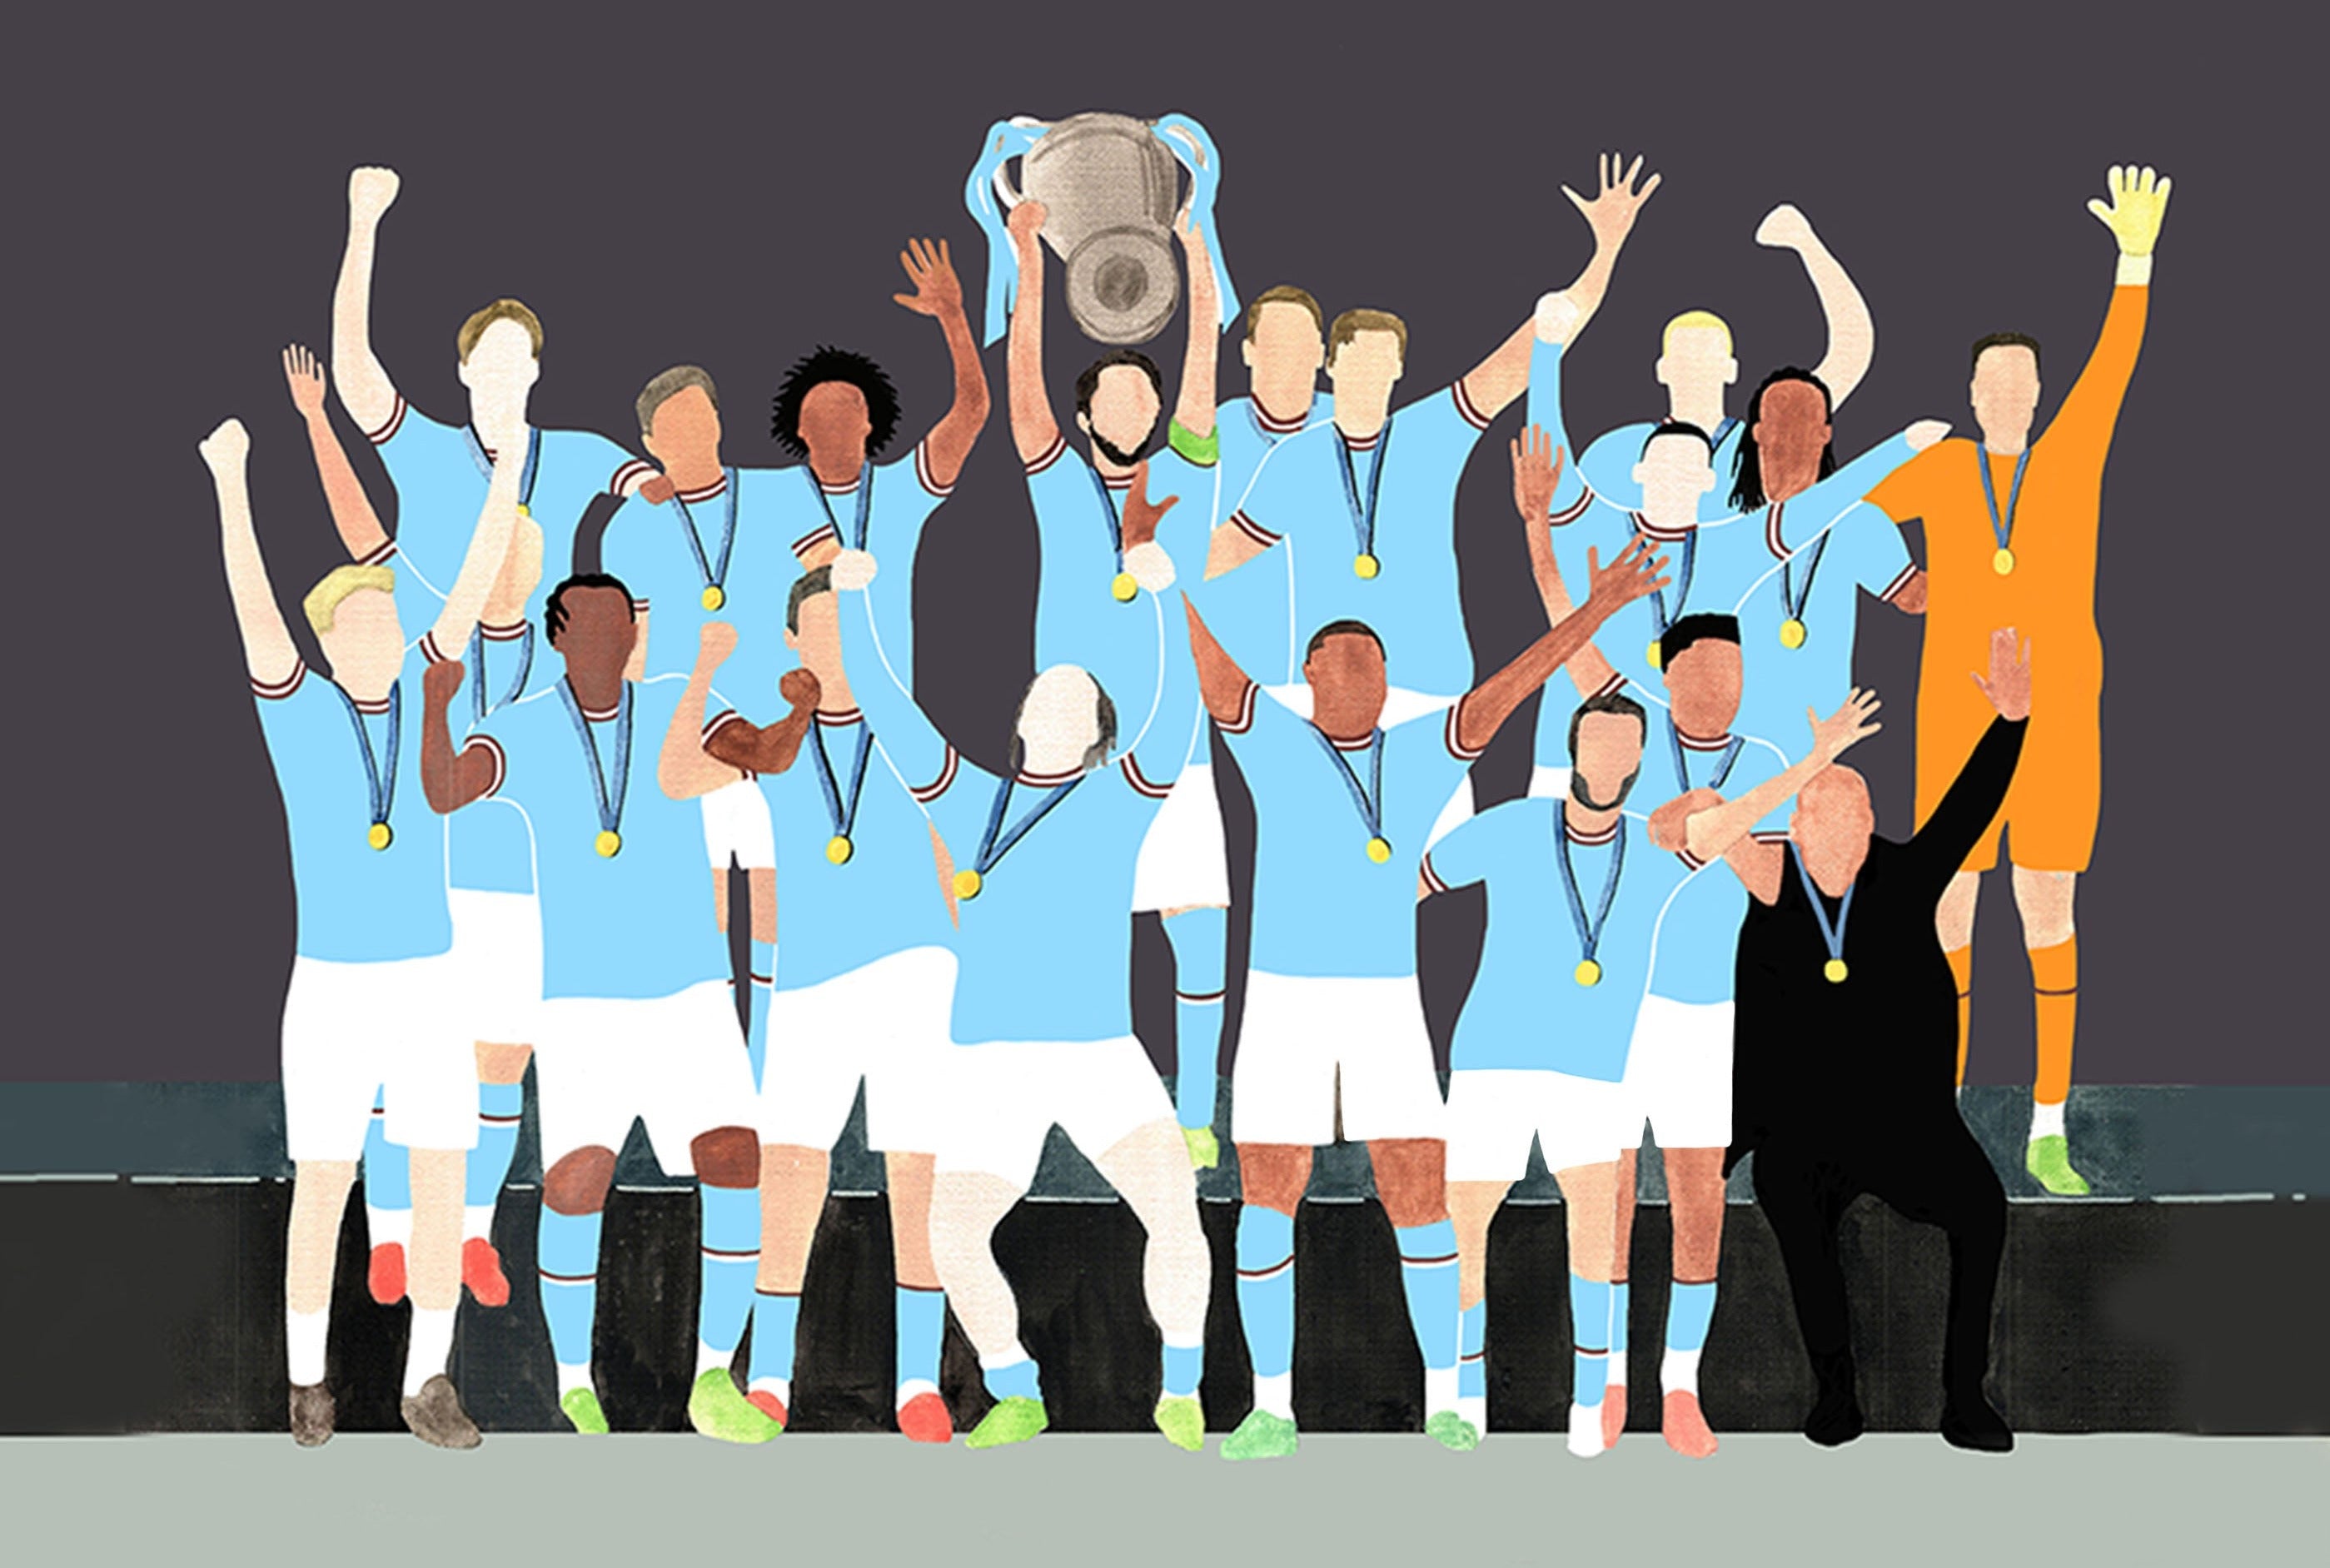 Manchester City - Championship Winning Team